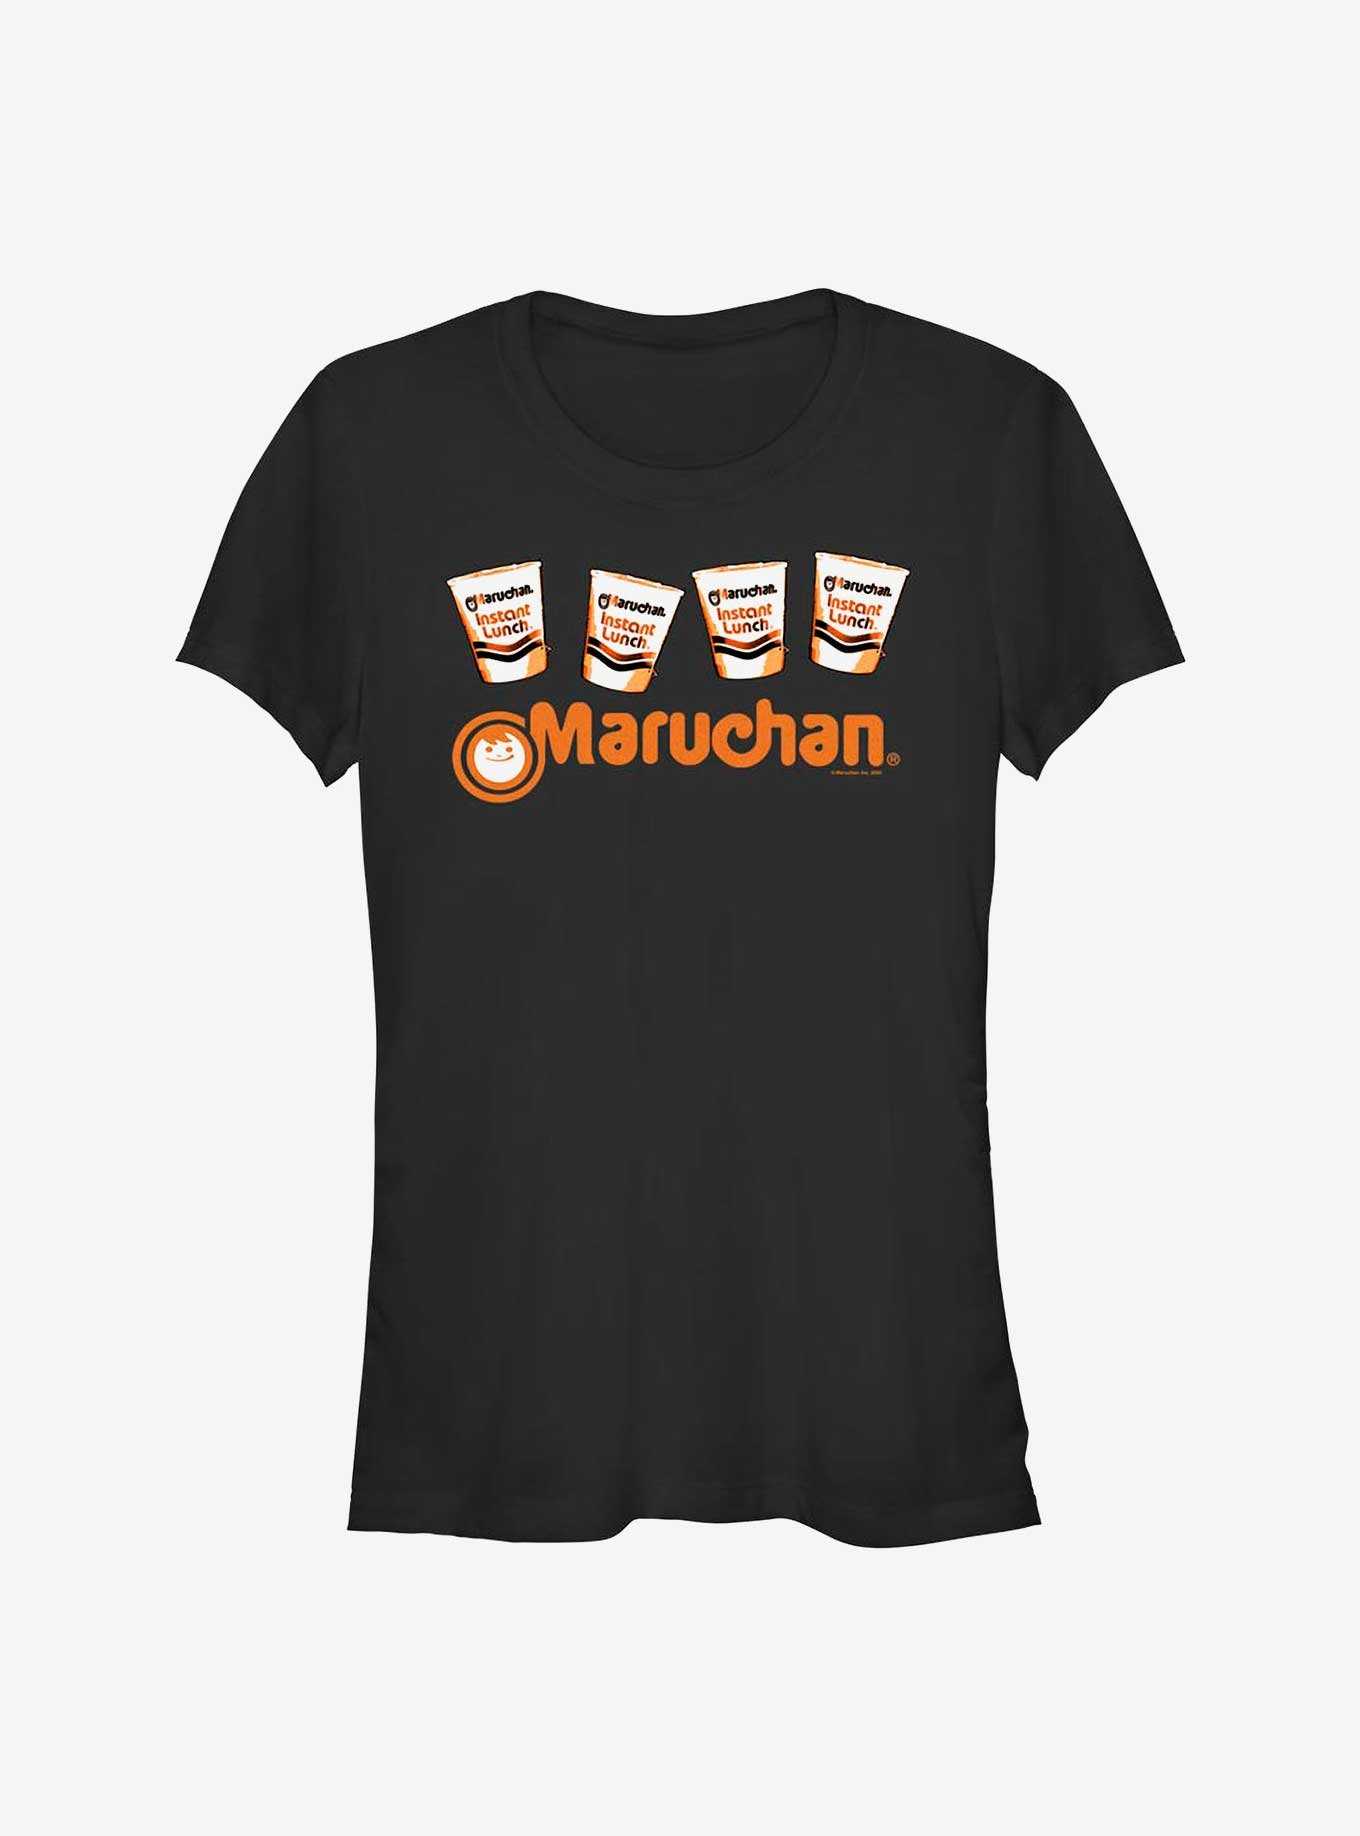 Maruchan Noodle Cups Row Girls T-Shirt, , hi-res